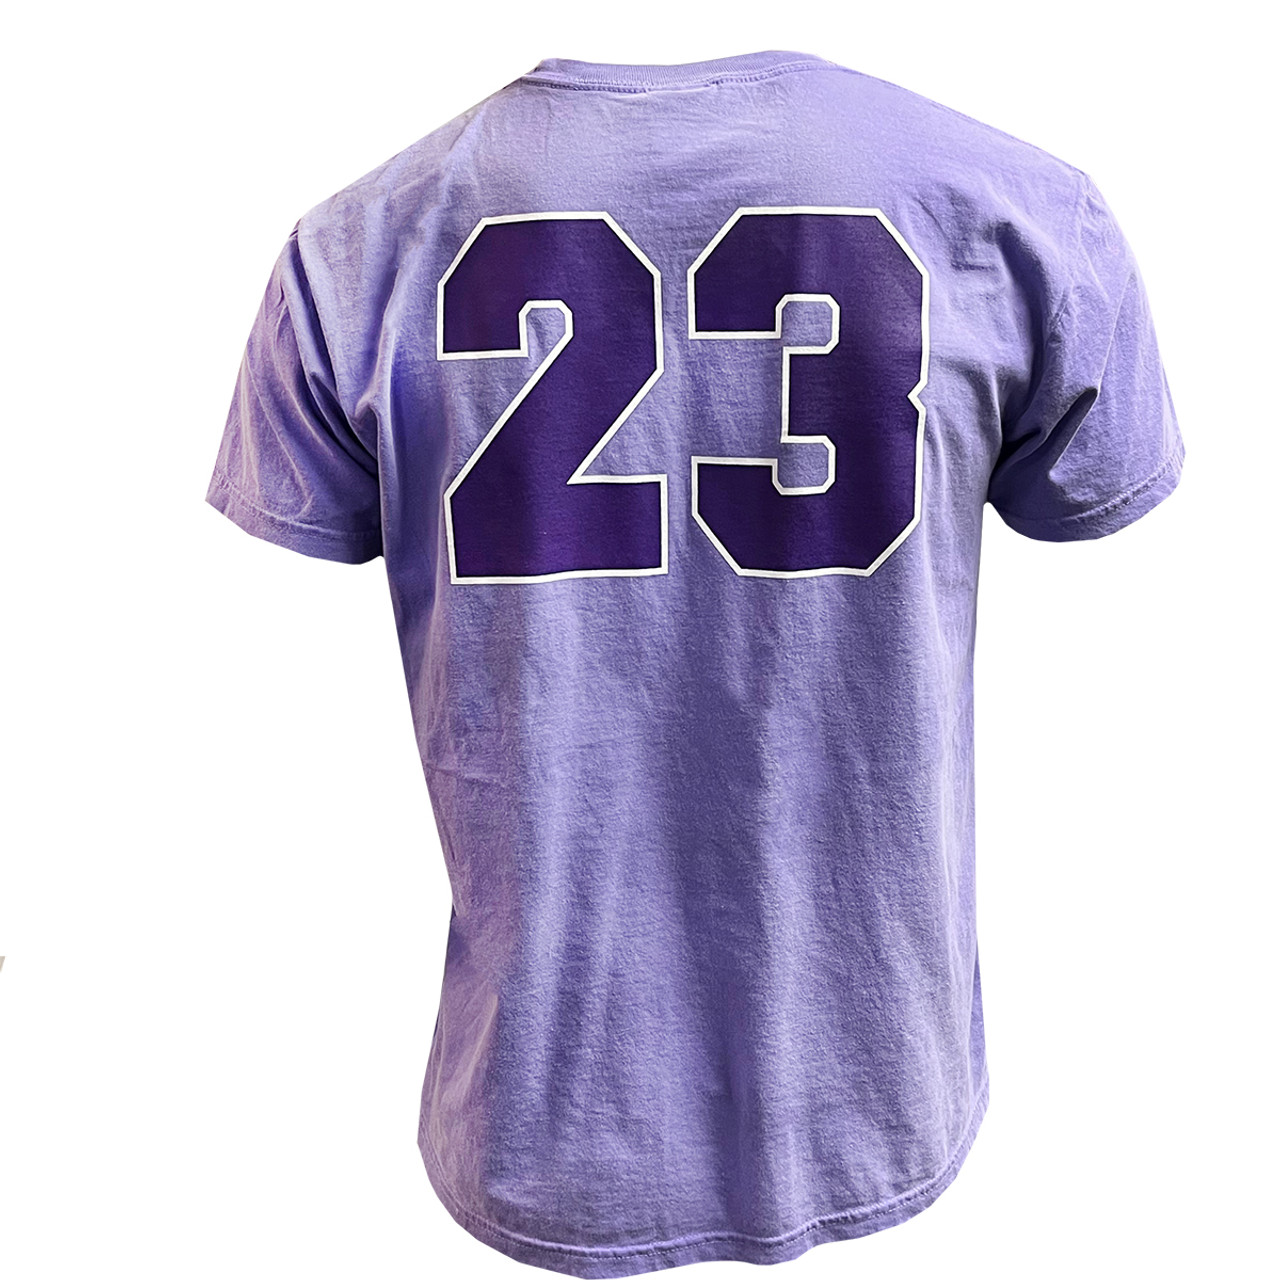 Trending] Buy New Custom ECU Pirates Baseball Jersey Purple